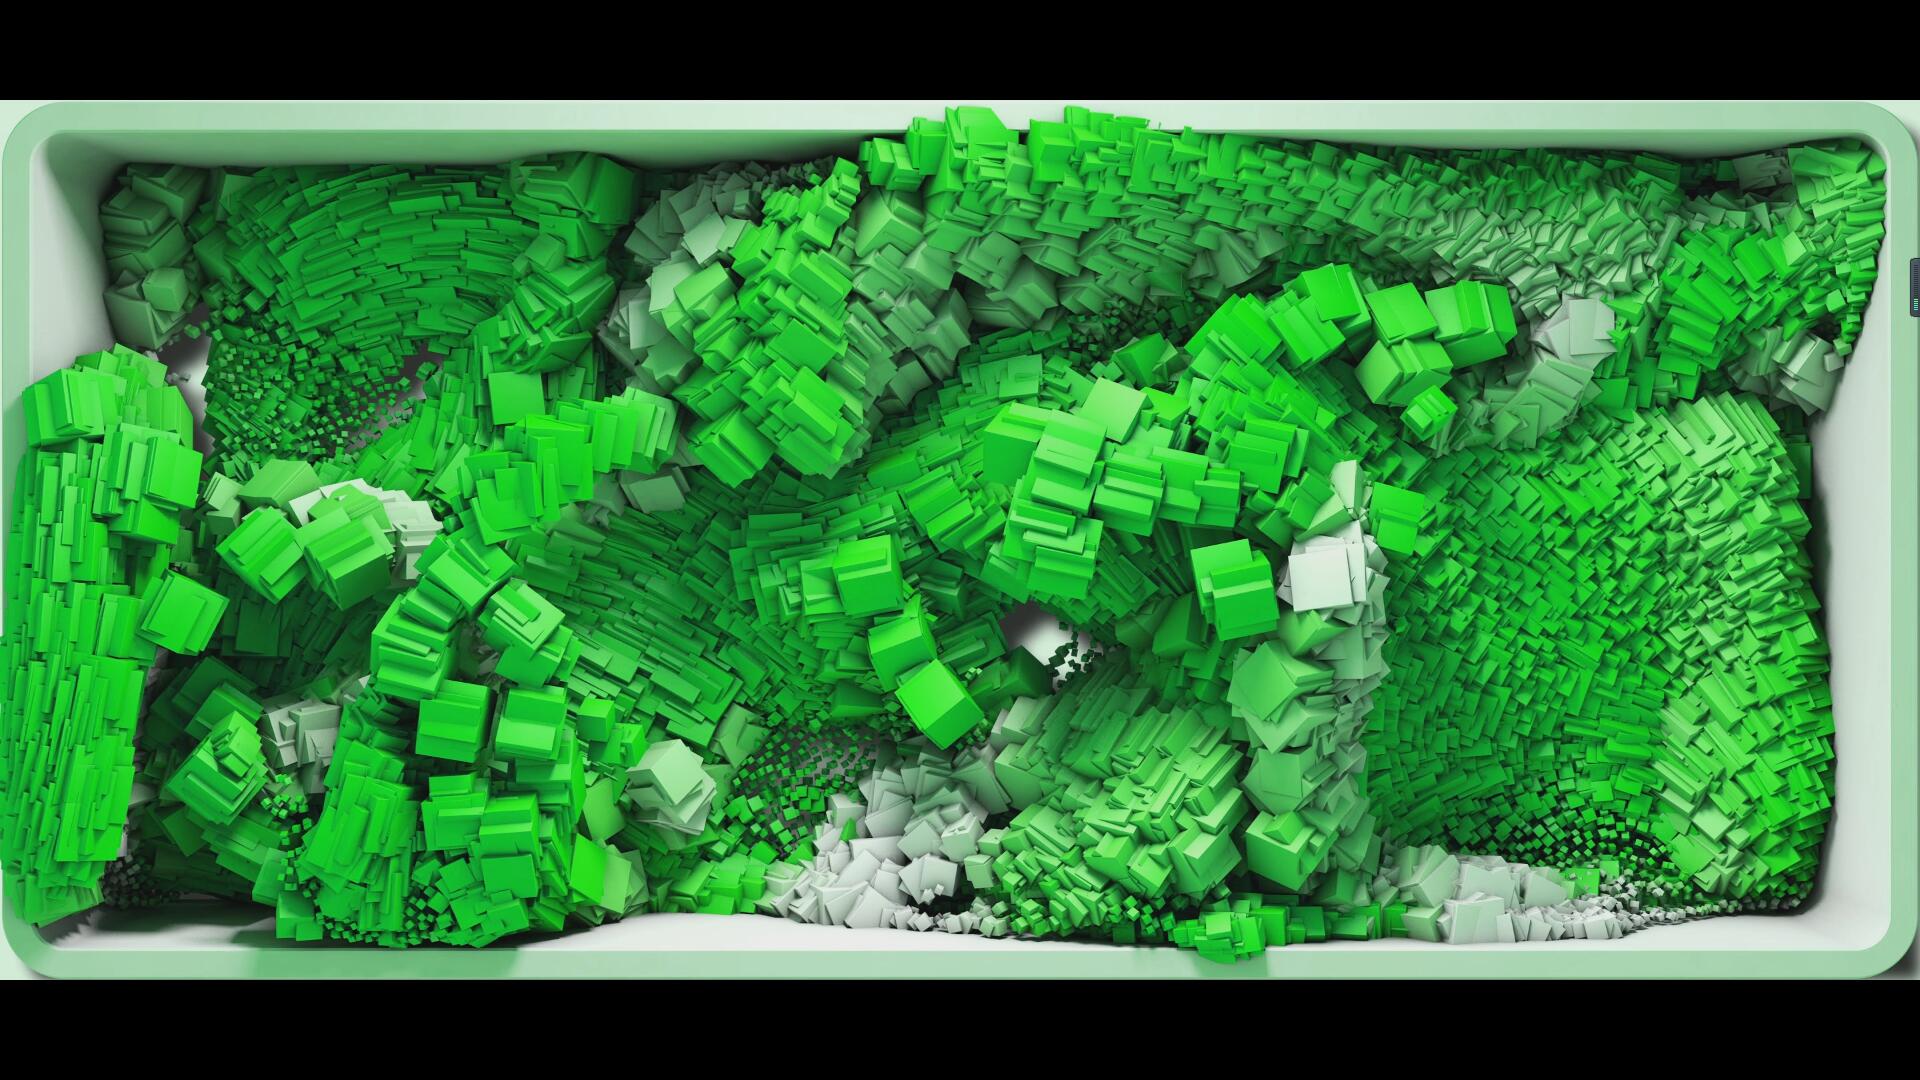 KJ21b粒子方块绿色沉浸式3D海浪LED显示屏视频素材抖音视觉立体